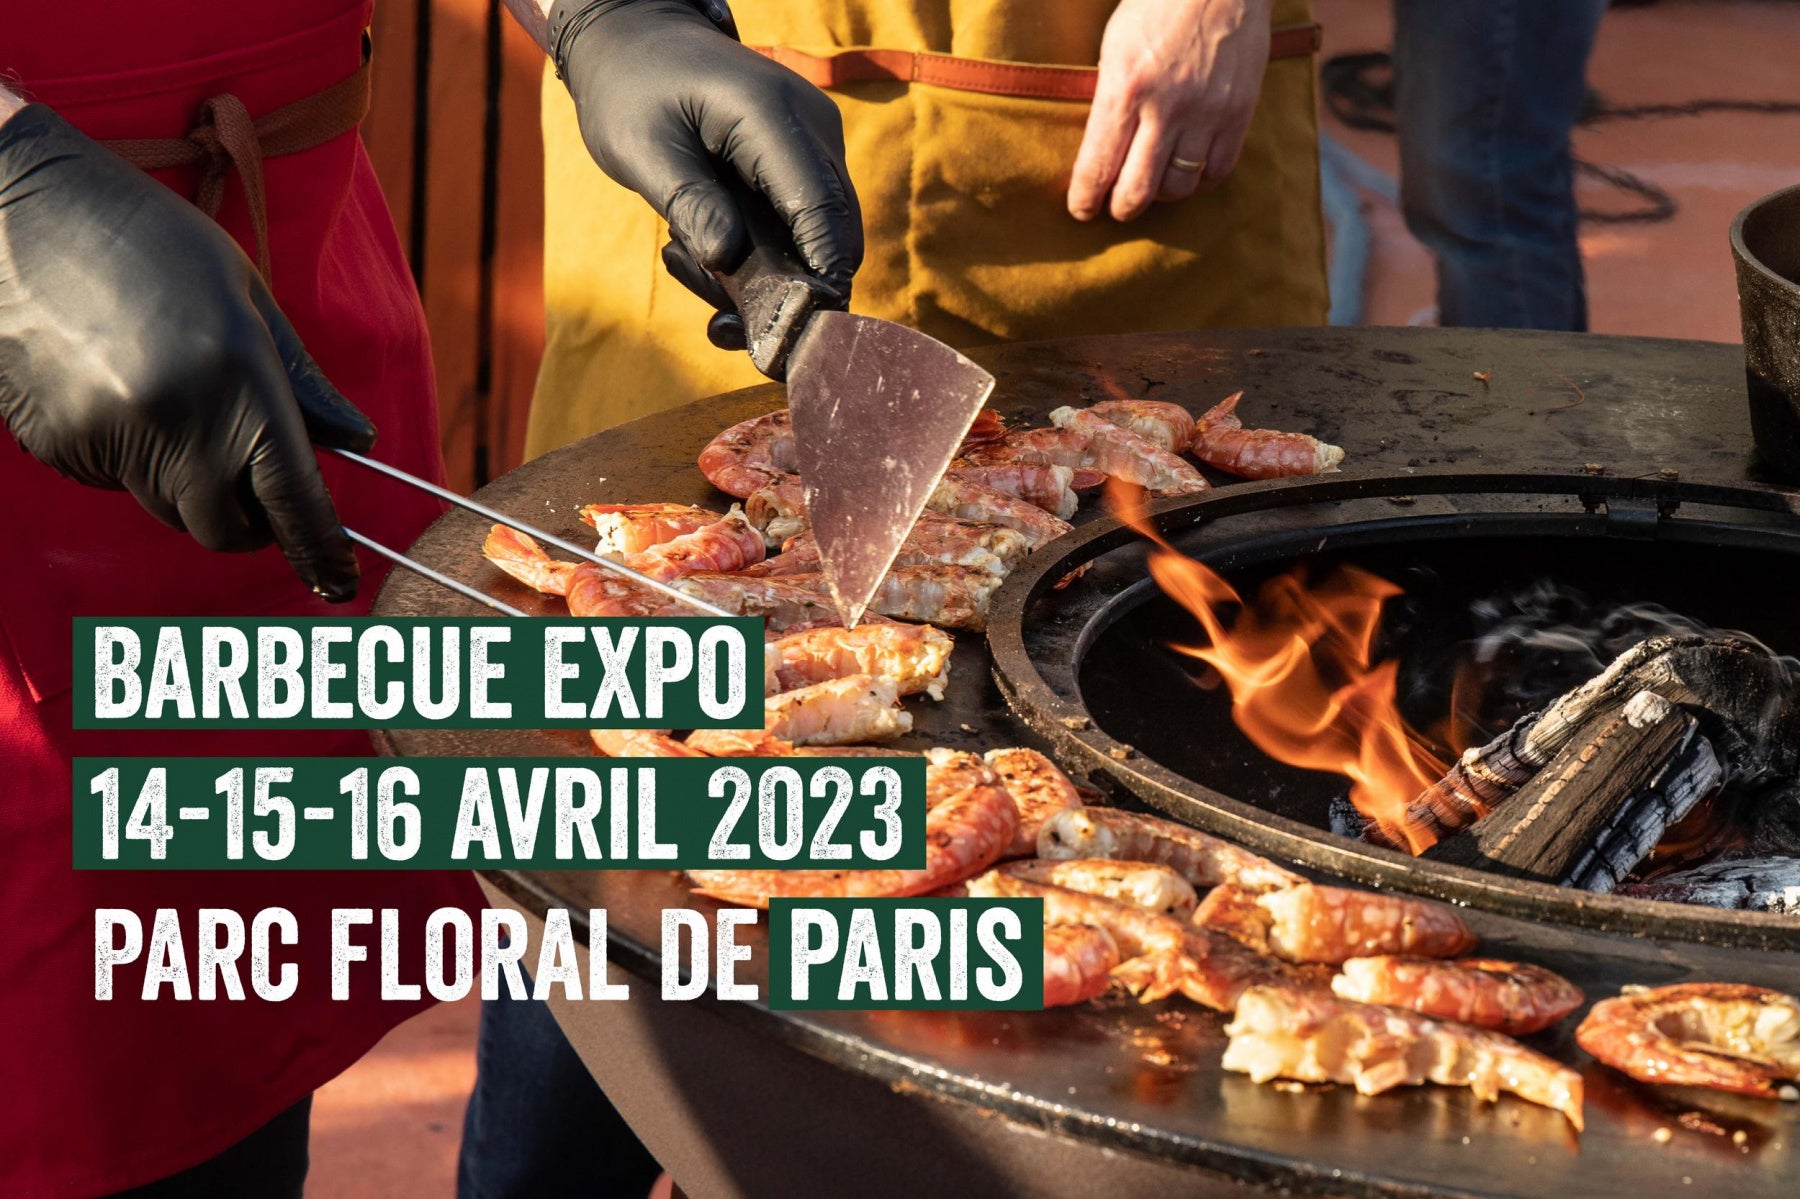 Barbecue Expo -pourquoi se rendre au plus grand salon de barbecue à Paris